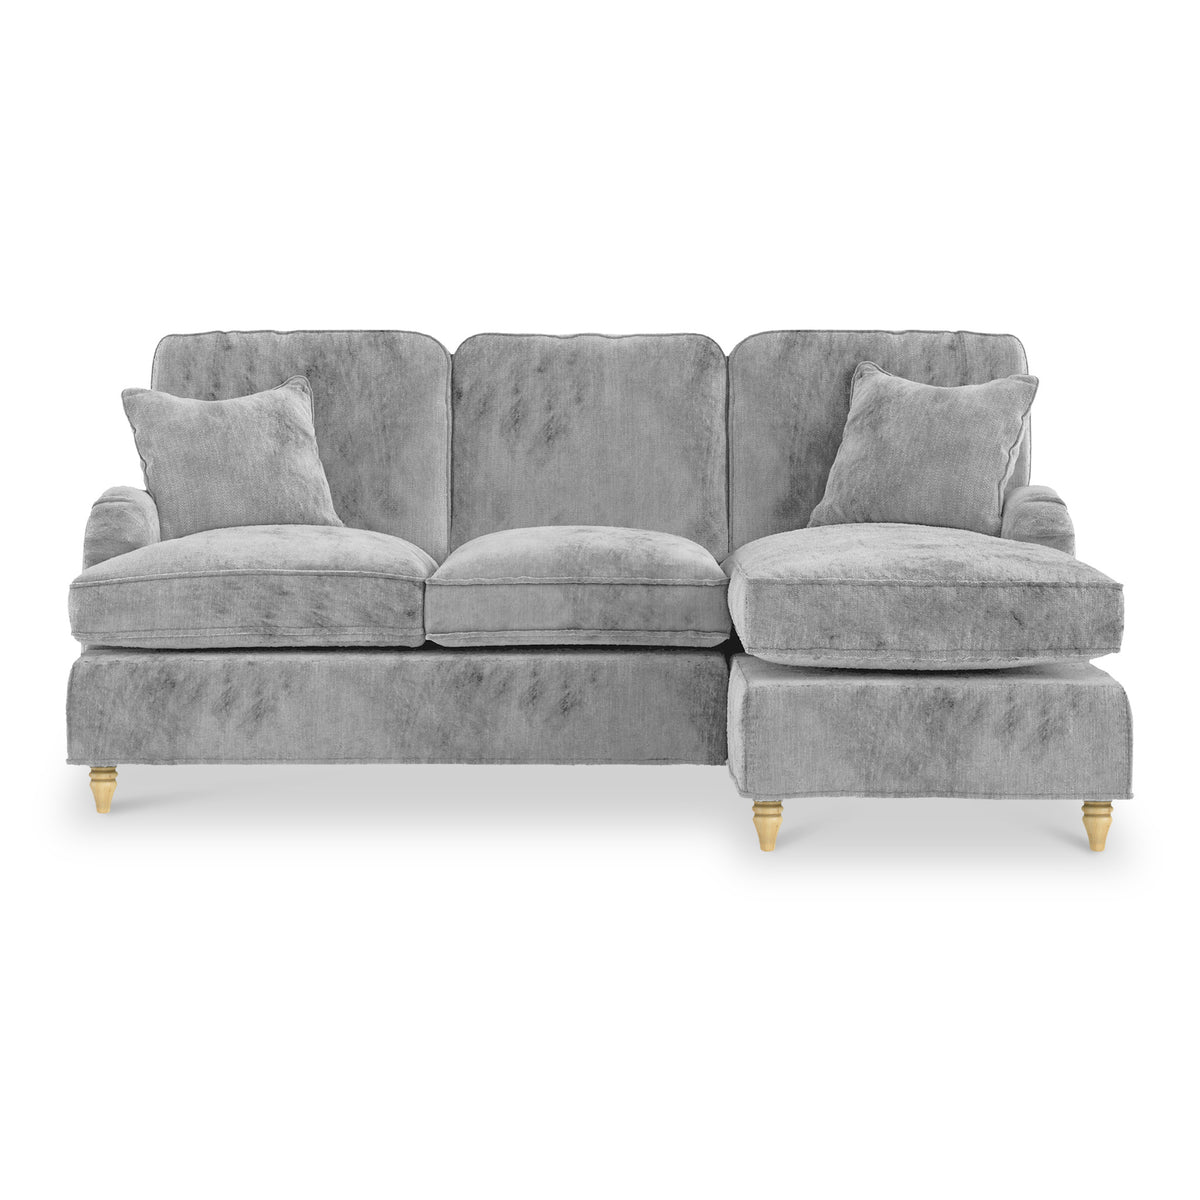 Arthur Ice Grey RH Chaise Sofa from Roseland Furniture